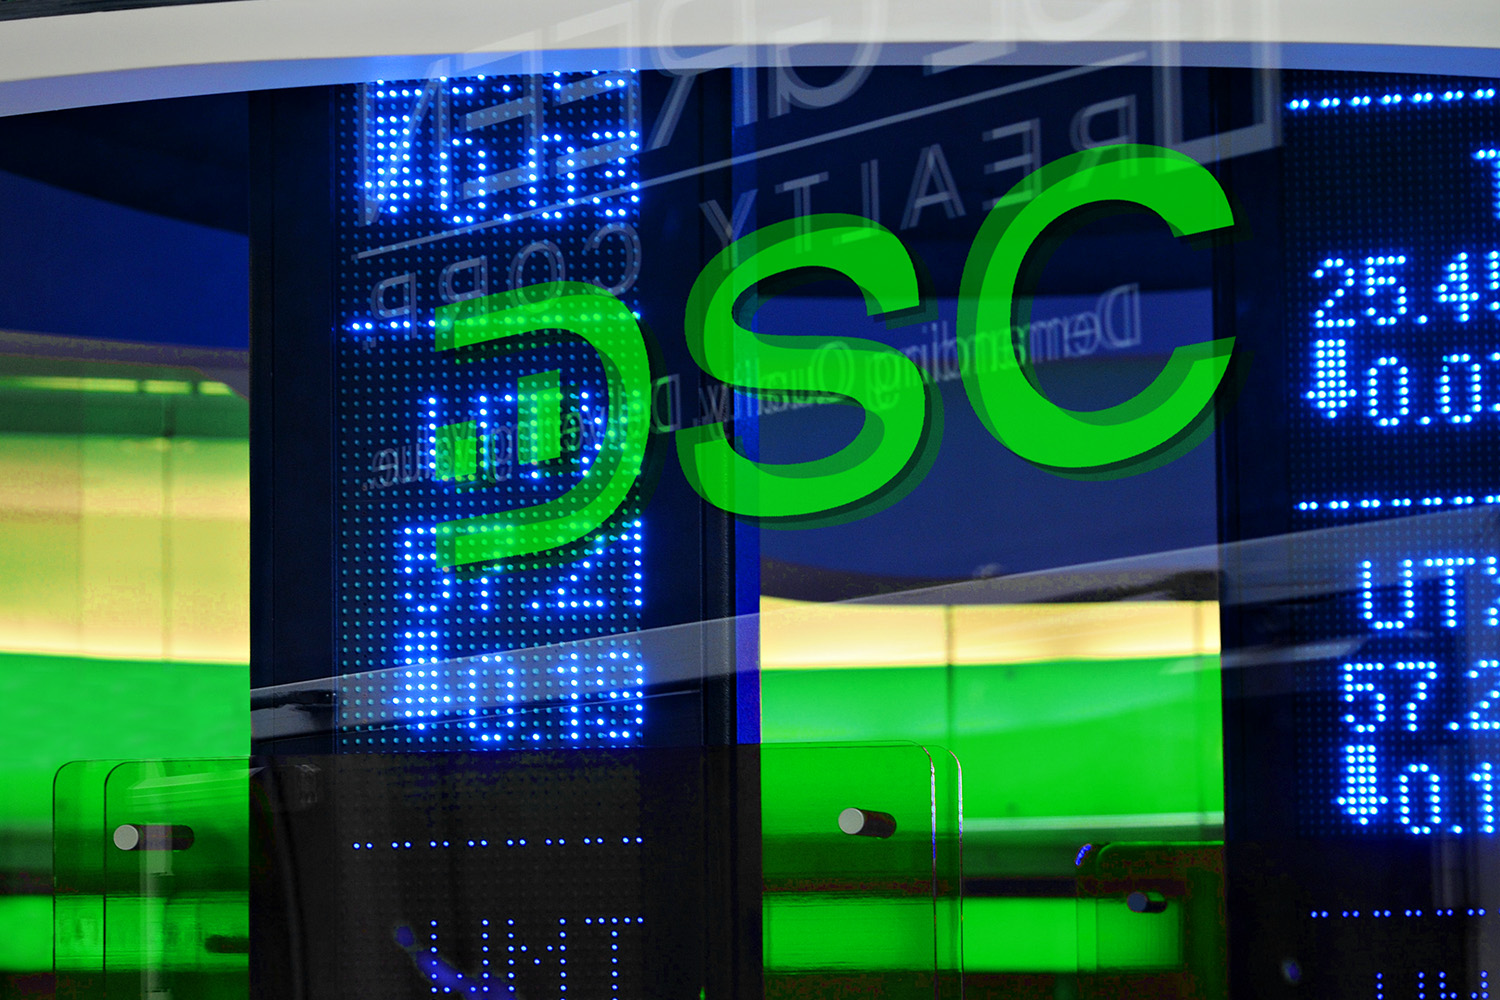 DSC Indoor signage reflecting on digital board